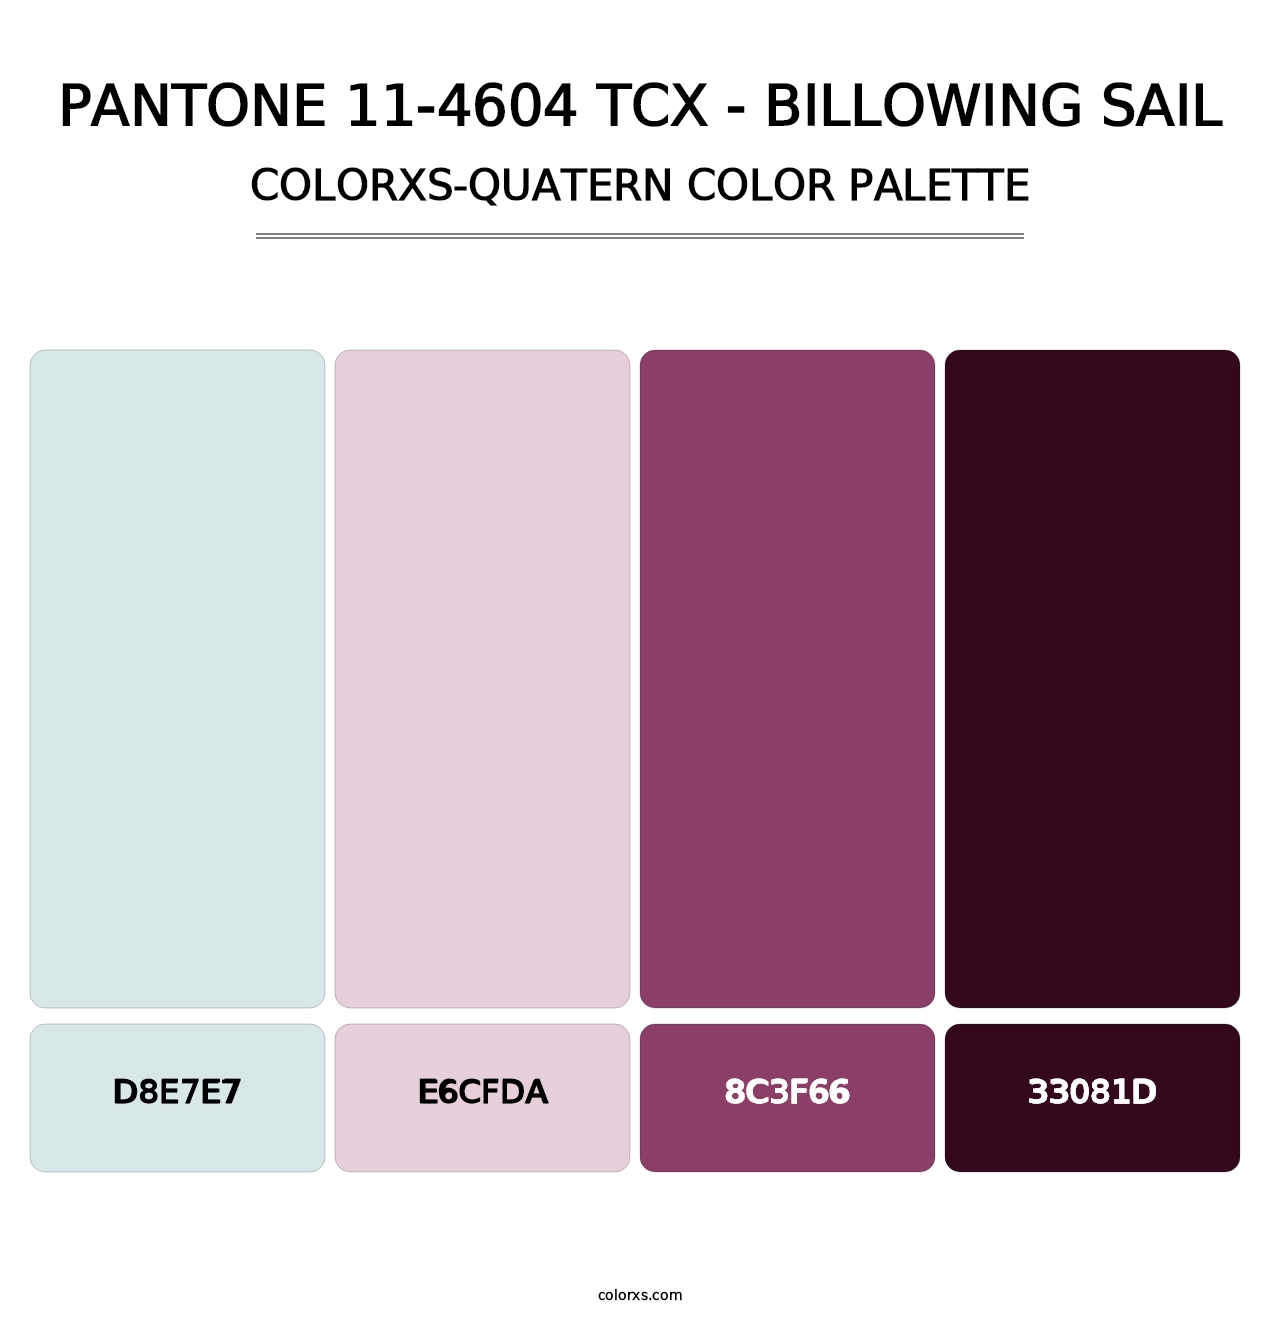 PANTONE 11-4604 TCX - Billowing Sail - Colorxs Quatern Palette